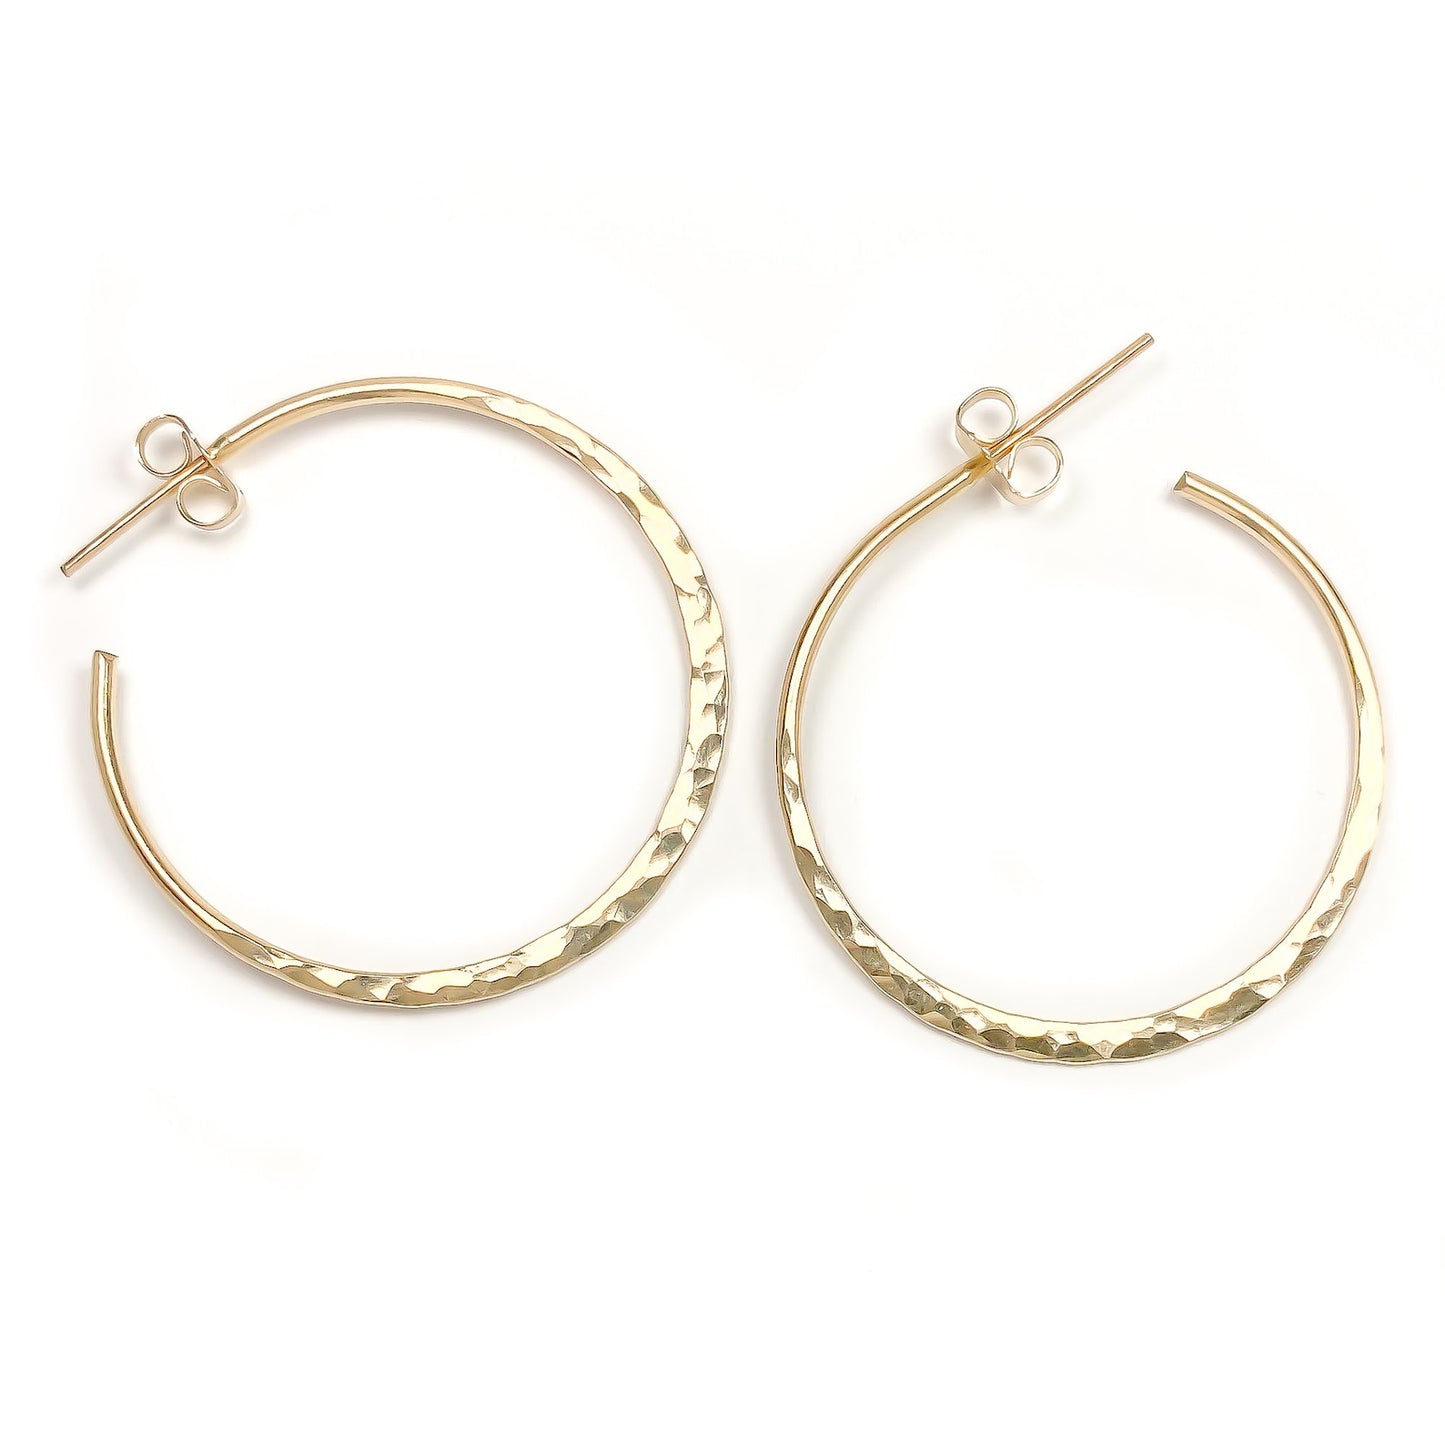 25mm Hammered Hoop Earrings, 14K Gold Filled